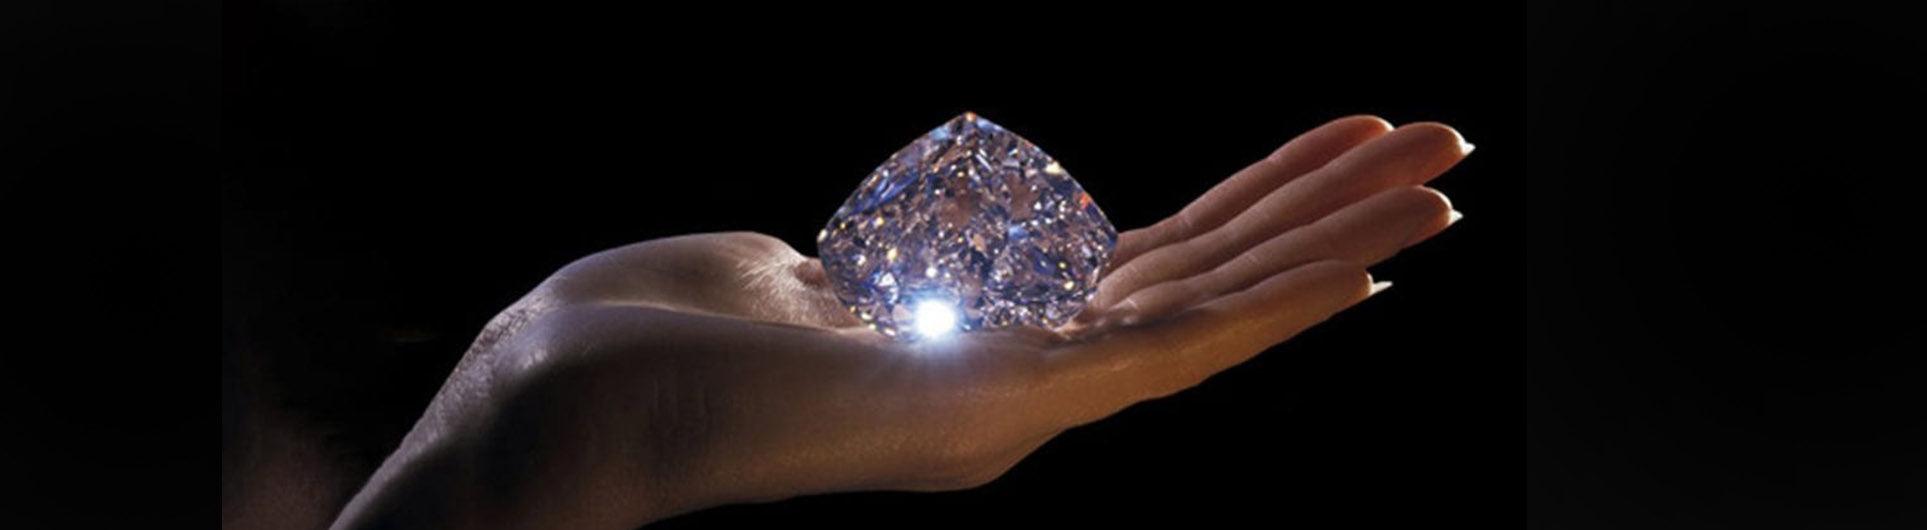 Most Expensive Diamonds No. 5 - De Beers Centenary Diamond - Monroe Yorke Diamonds